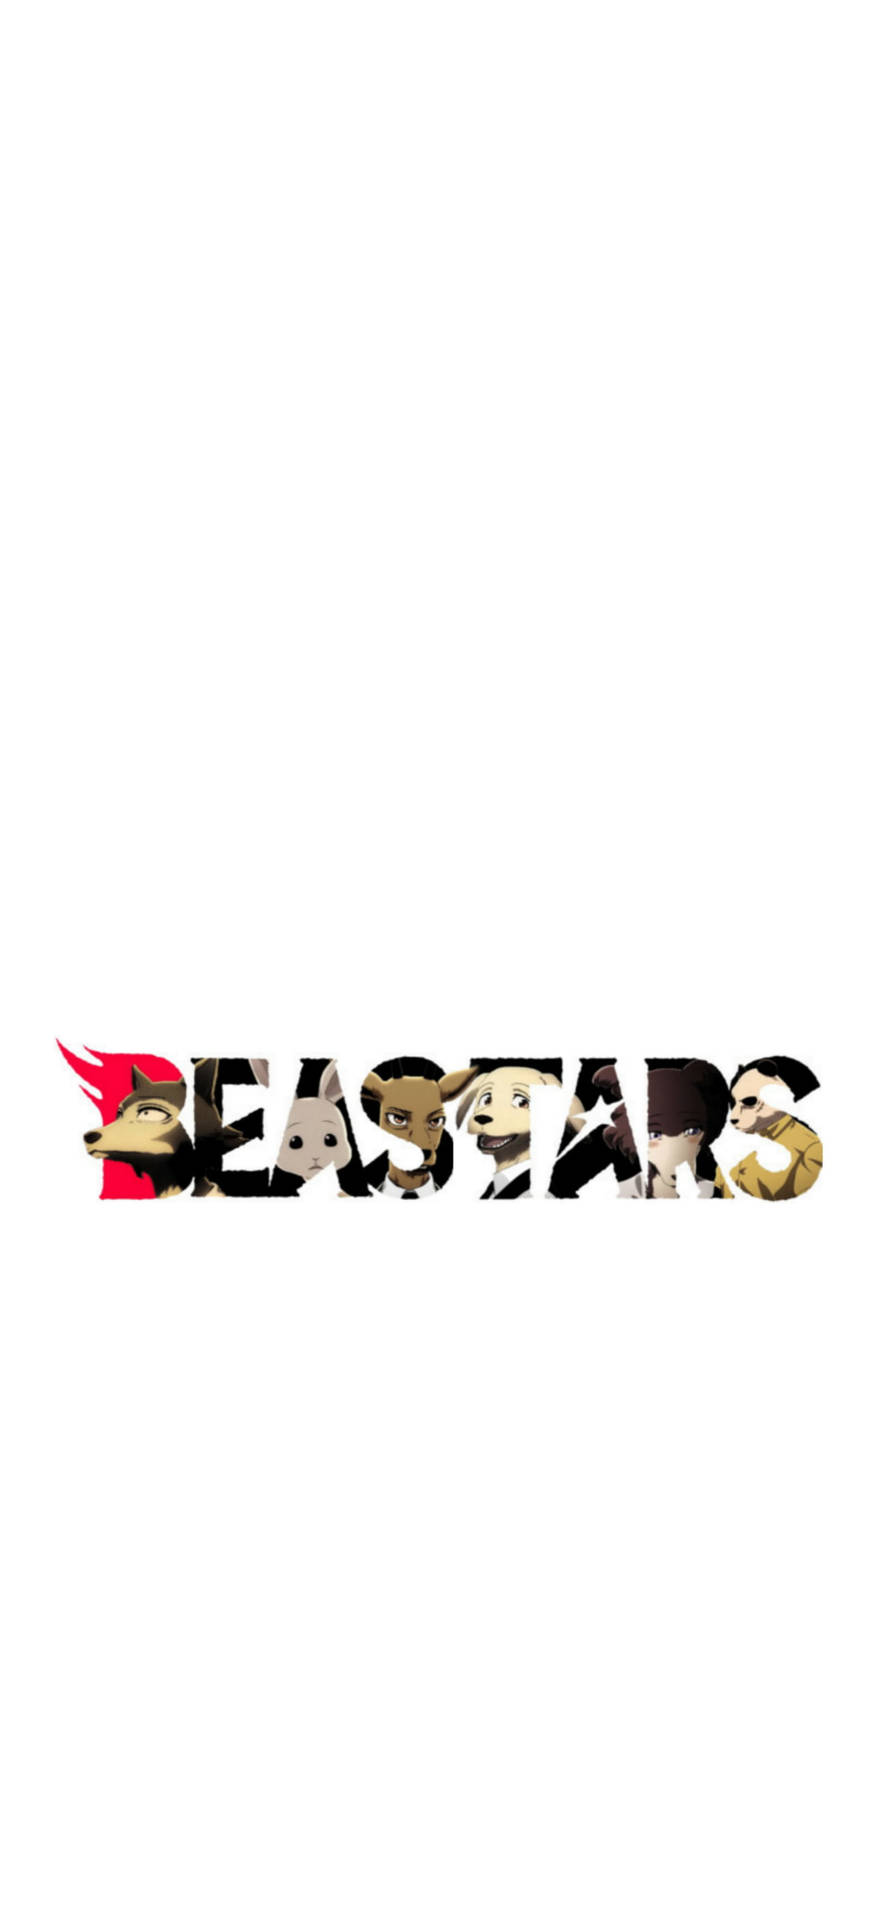 Beastars 1297X2806 Wallpaper and Background Image